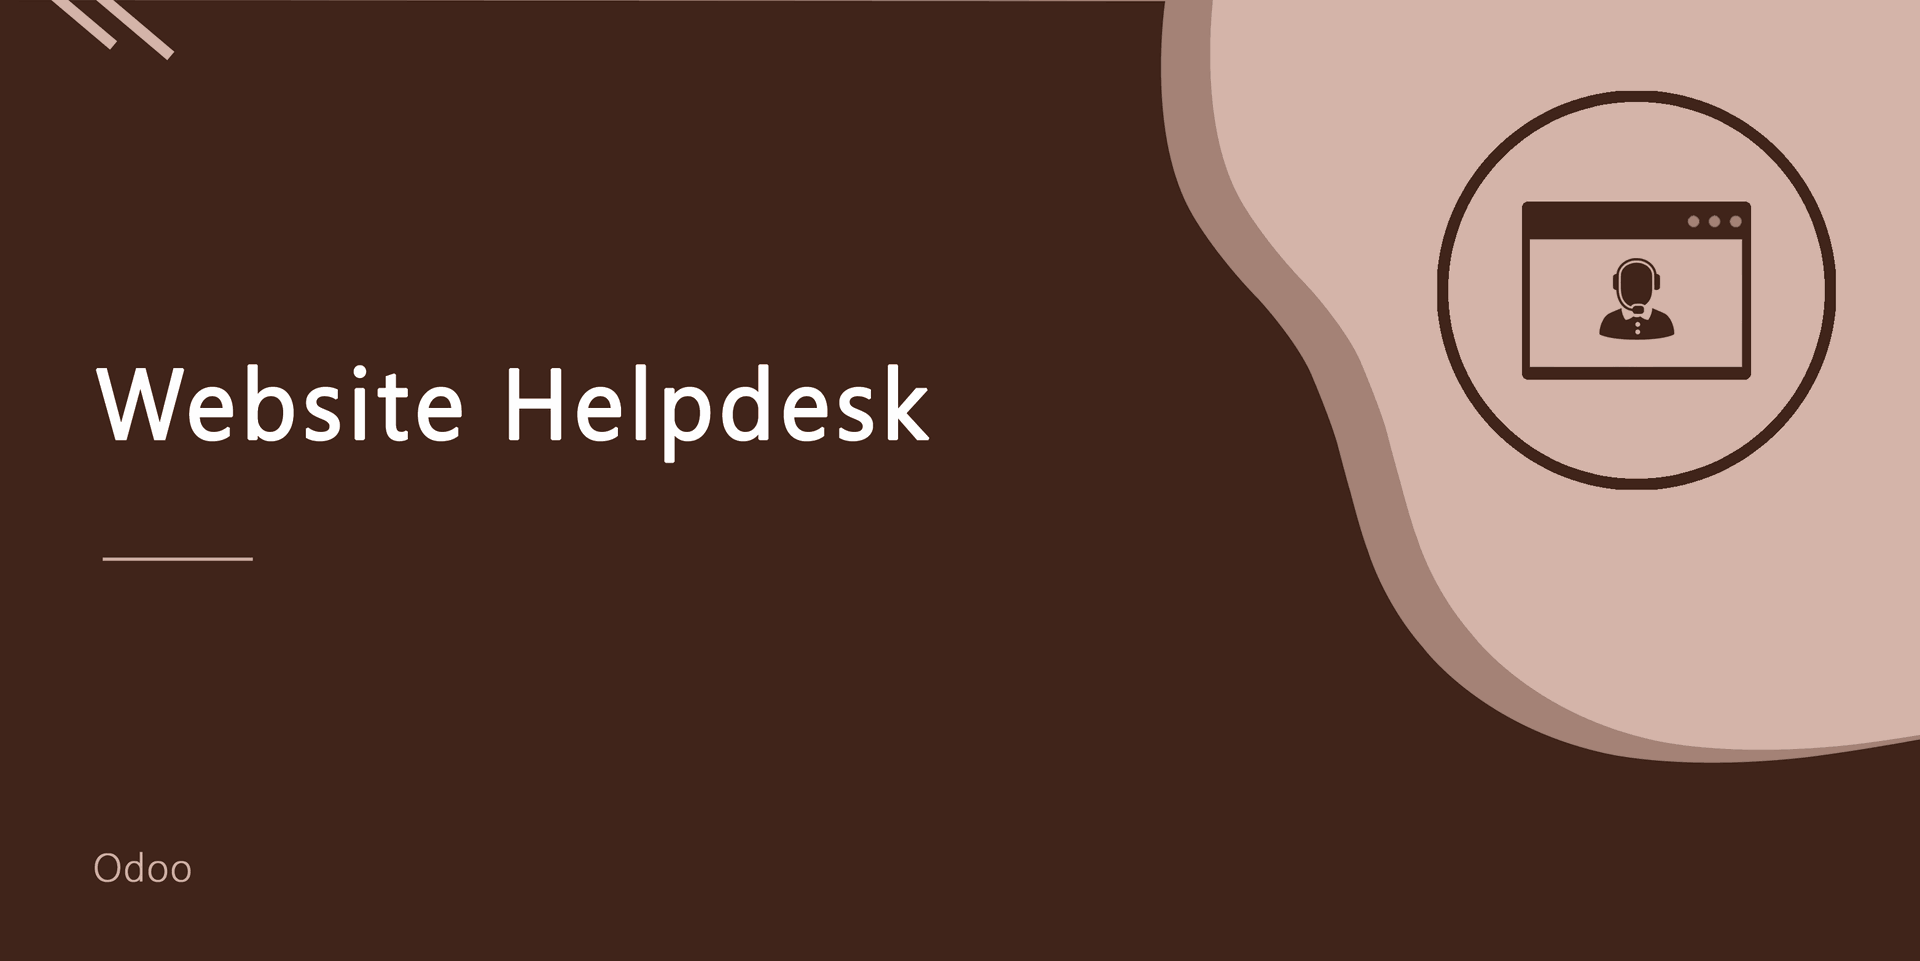 Website Helpdesk
